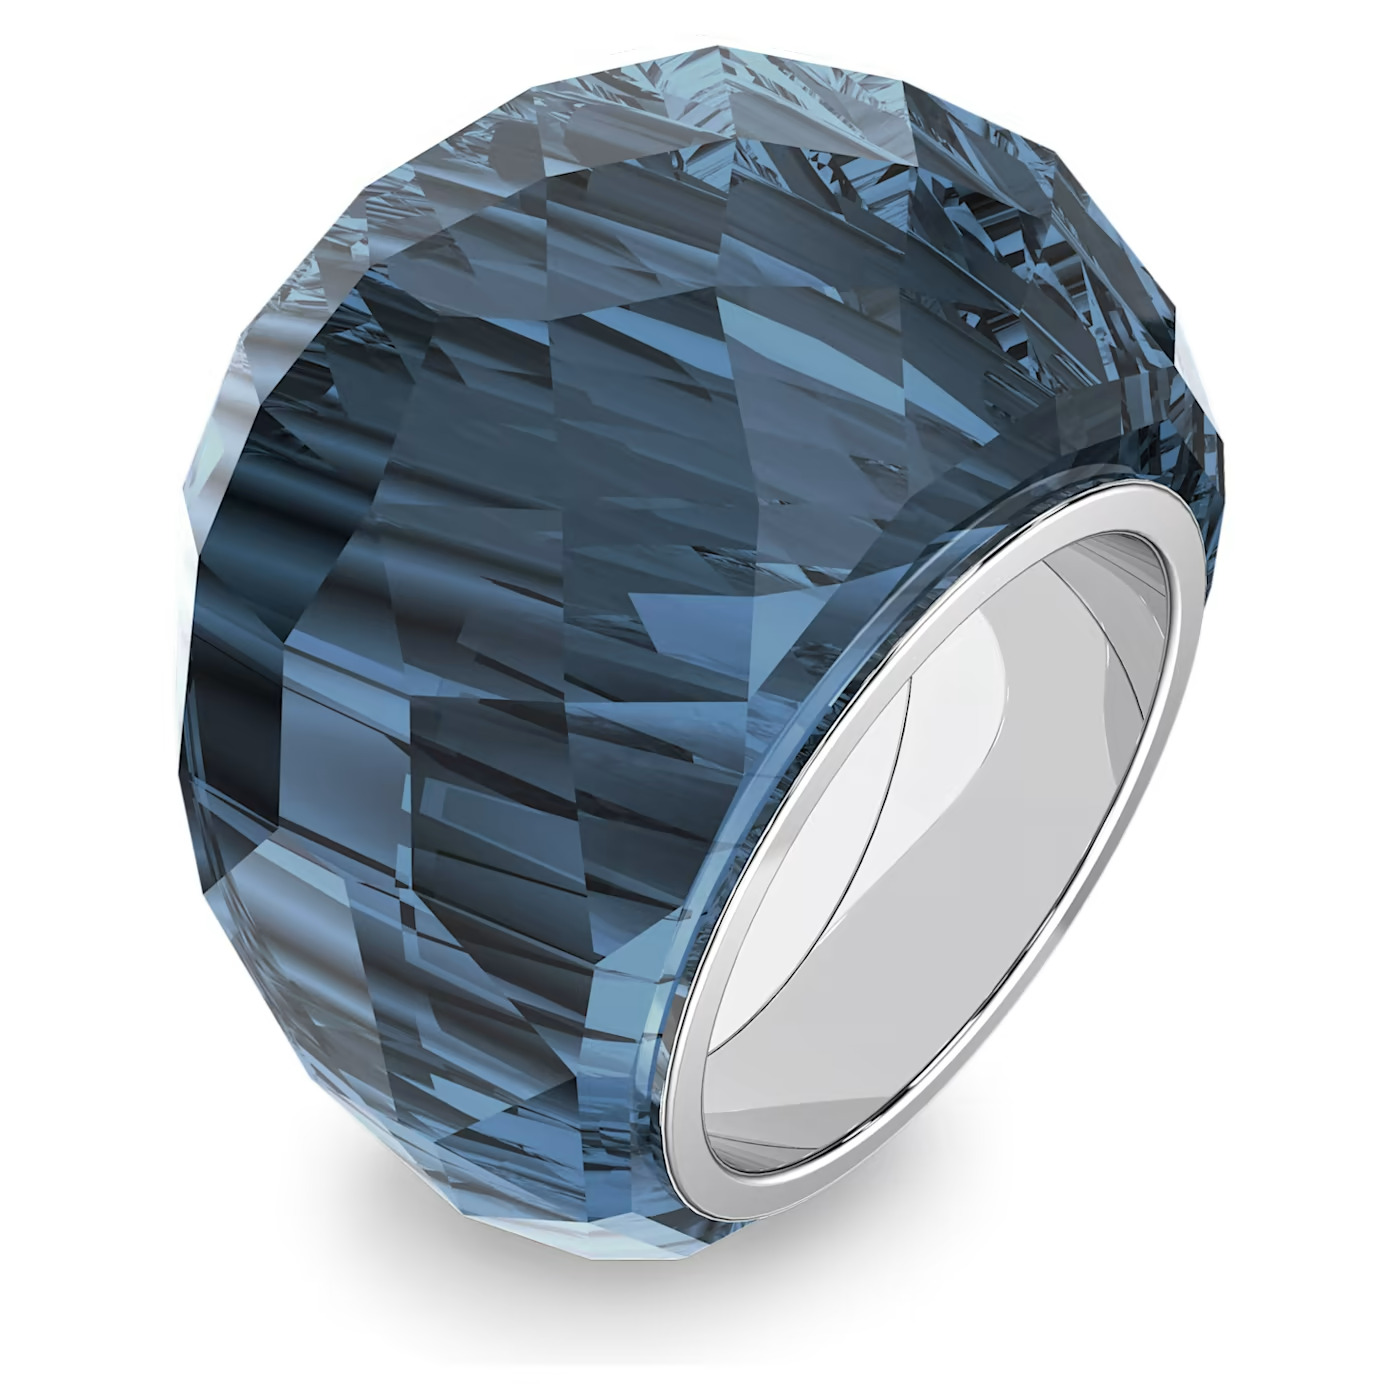 Swarovski Nirvana ring Blue Stainless steel Size 52/US 6 #5474371 $195